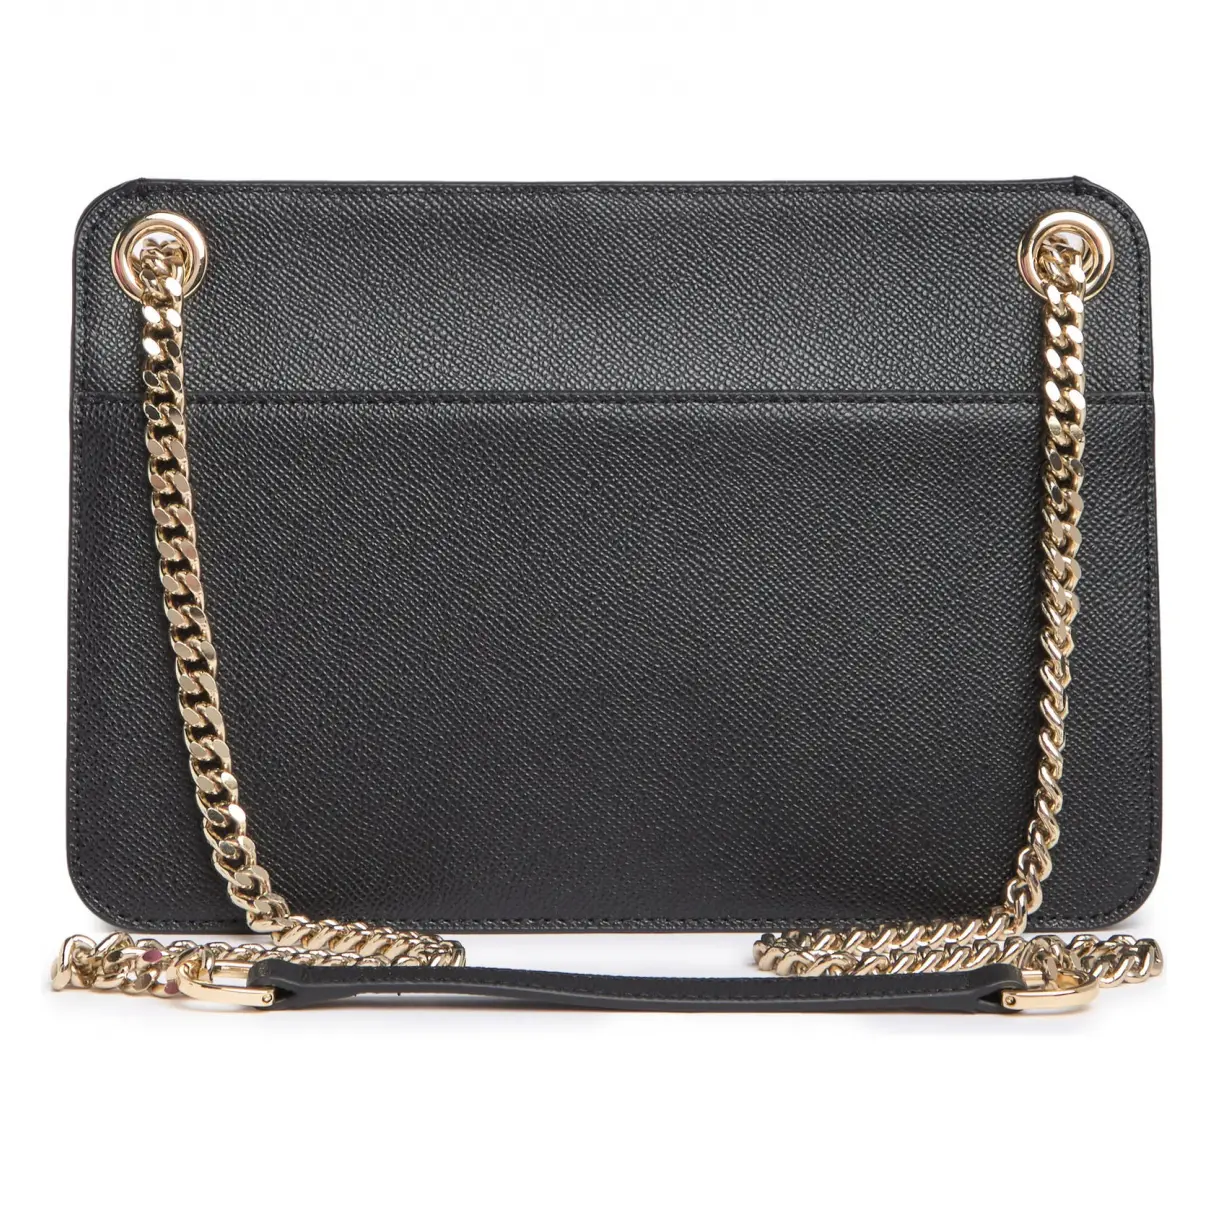 Buy Furla Leather handbag online